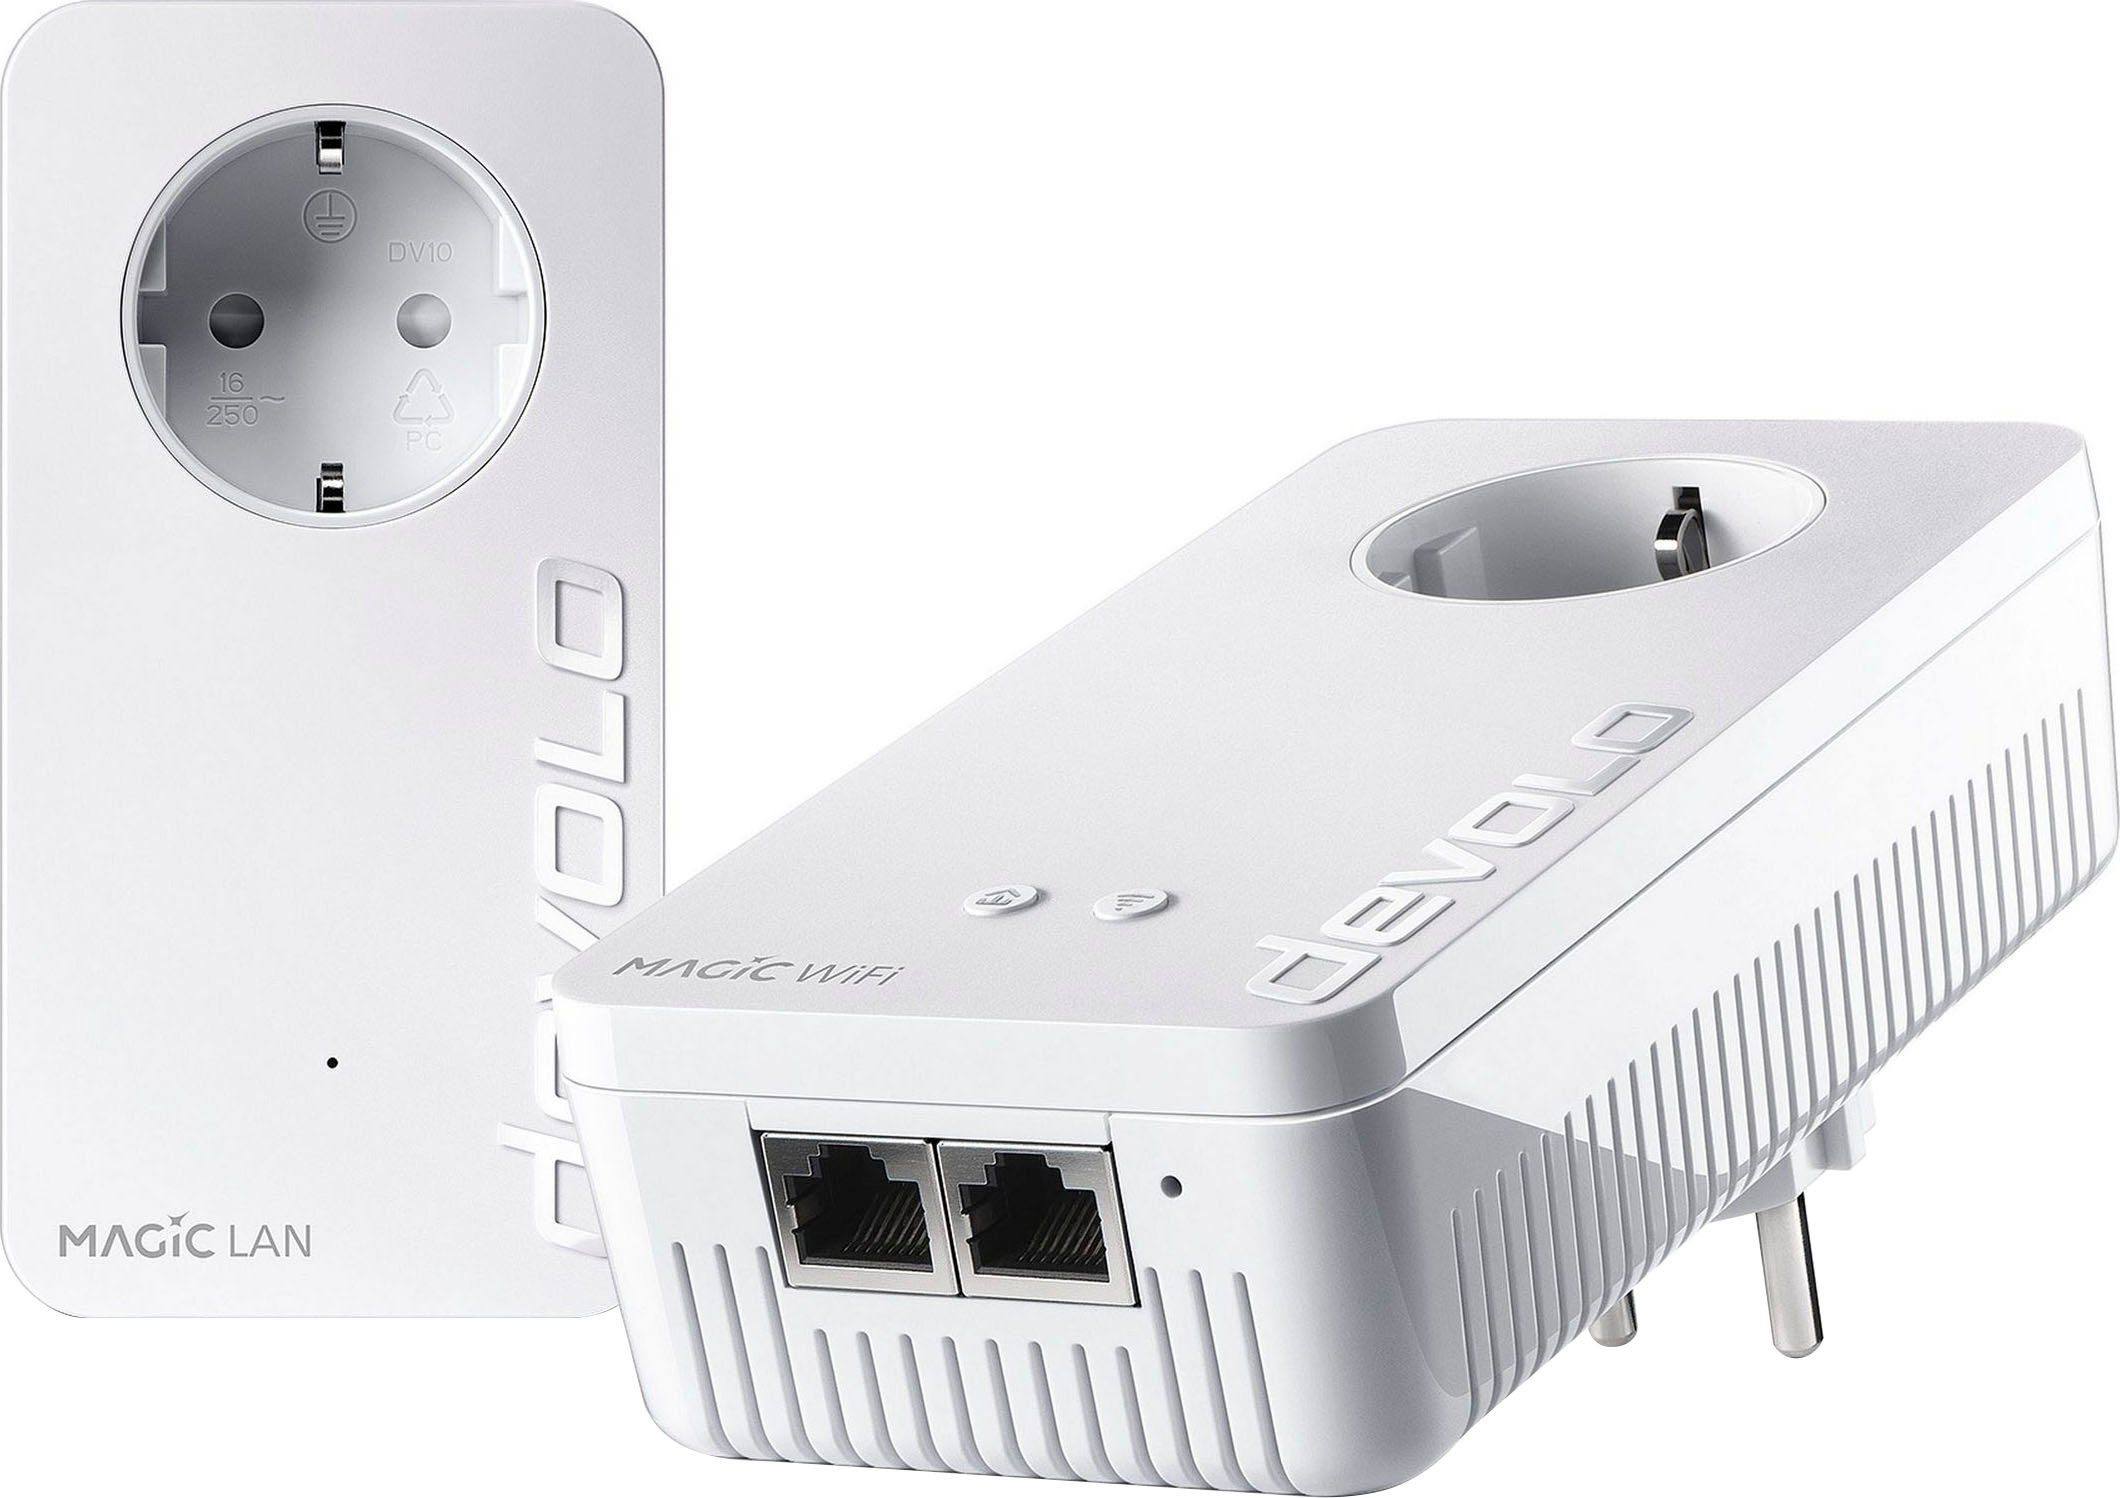 LAN, Powerline WiFi DEVOLO + (1200Mbit, 3x WLAN-Router Magic Mesh) Starter Kit WLAN, ac 1